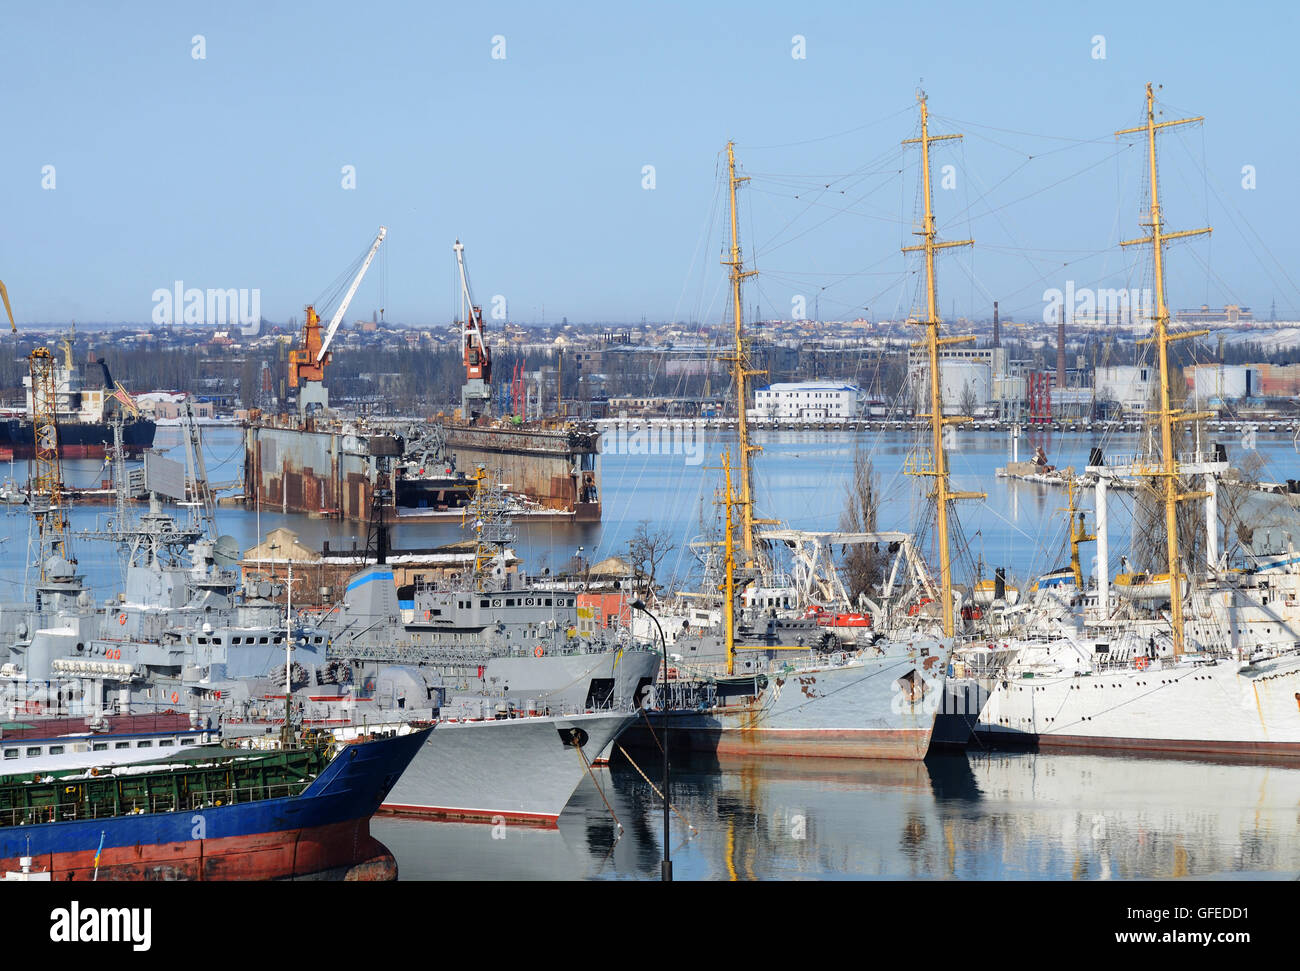 Naval ships moored in military harbor of Odessa - largest Ukrainian sea port on Black Sea,Europe Stock Photo